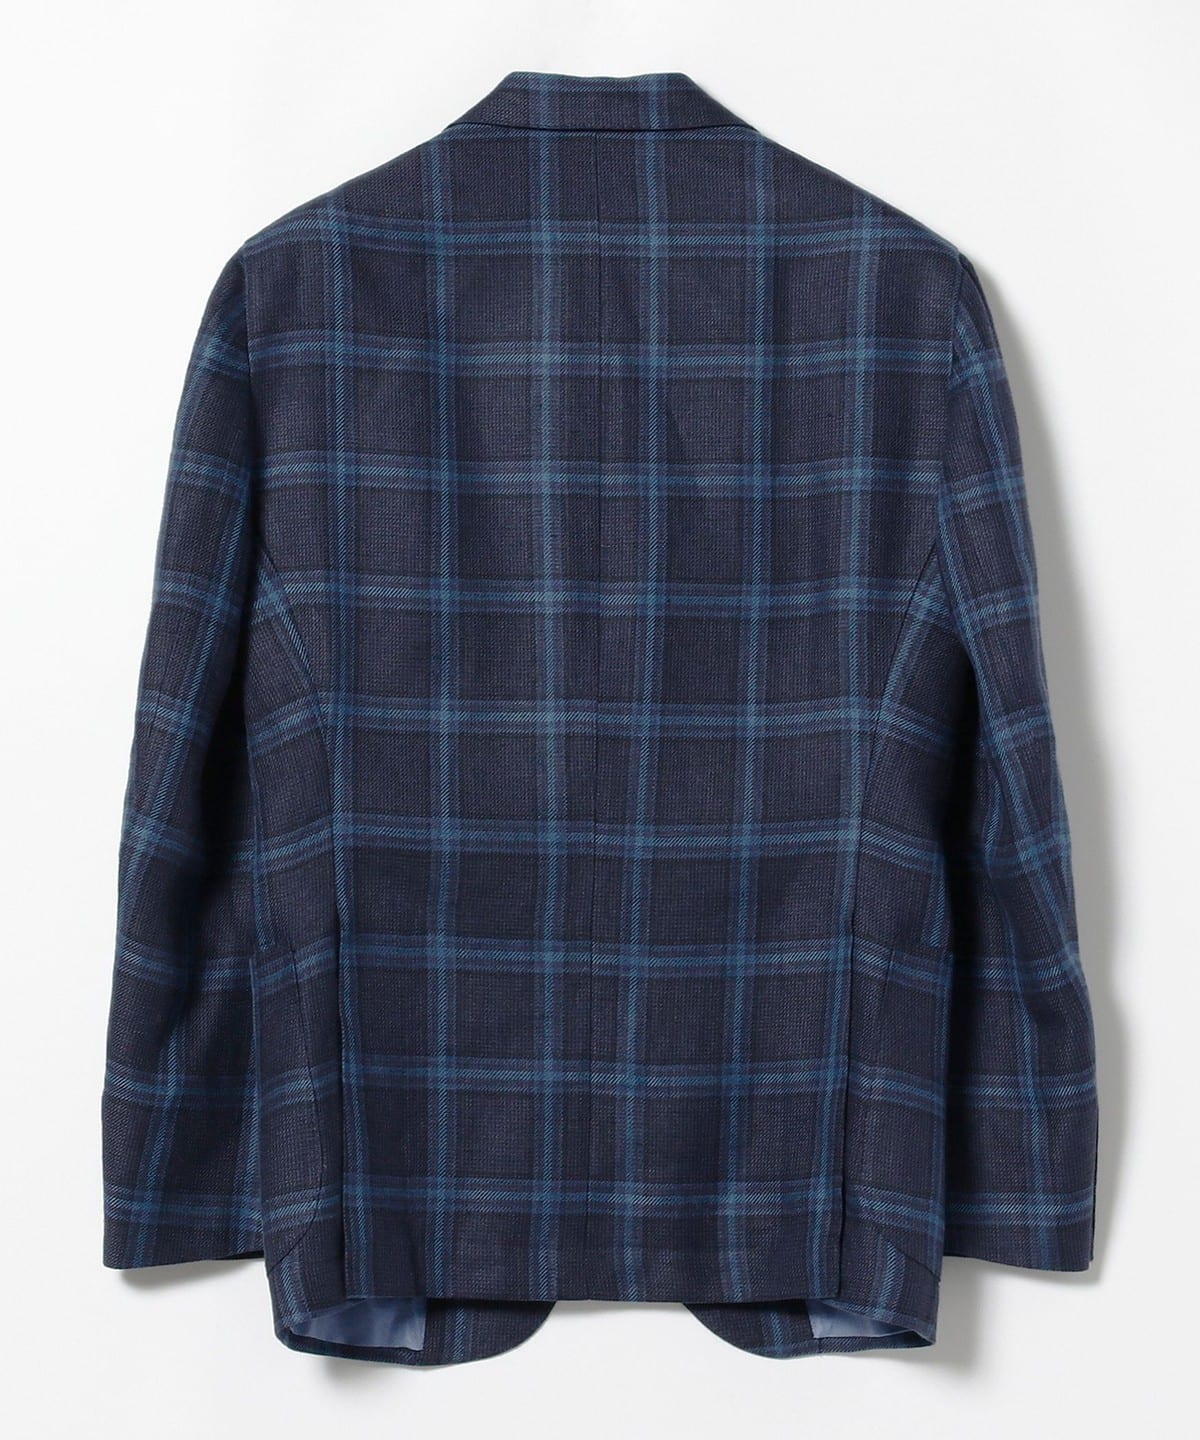 BEAMS F [Outlet] DE PETRILLO / POSILLIPO Linen Blue Check Jacket 